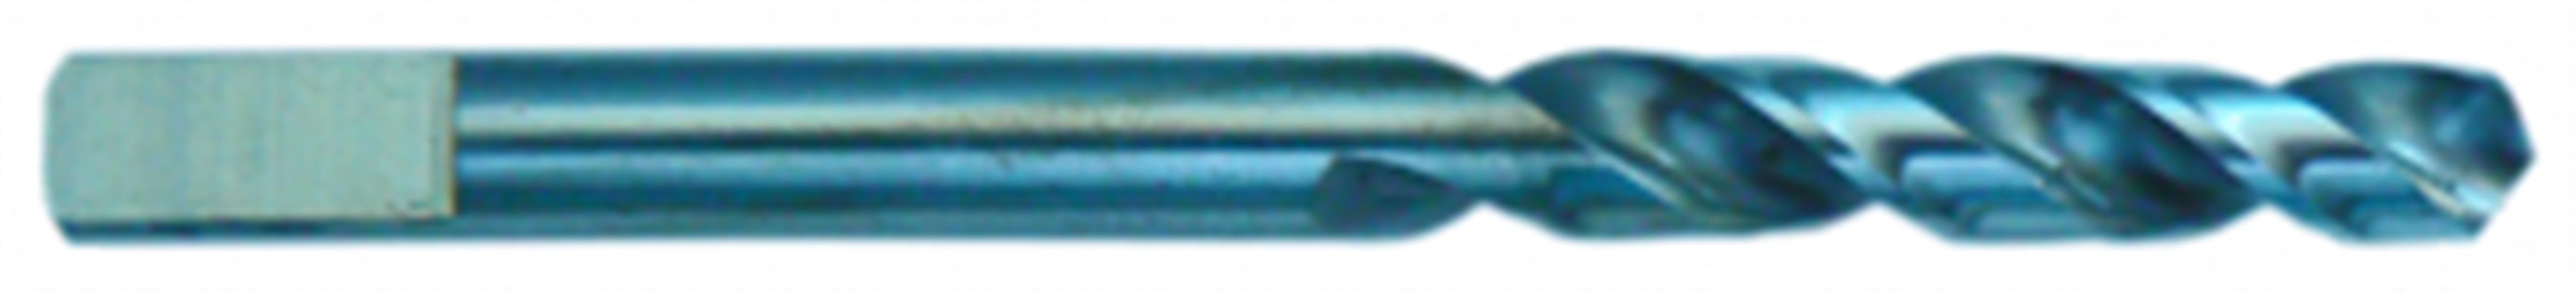 CraftPro 9S710SD32-152 - 6.35mm Hole Saw Drill